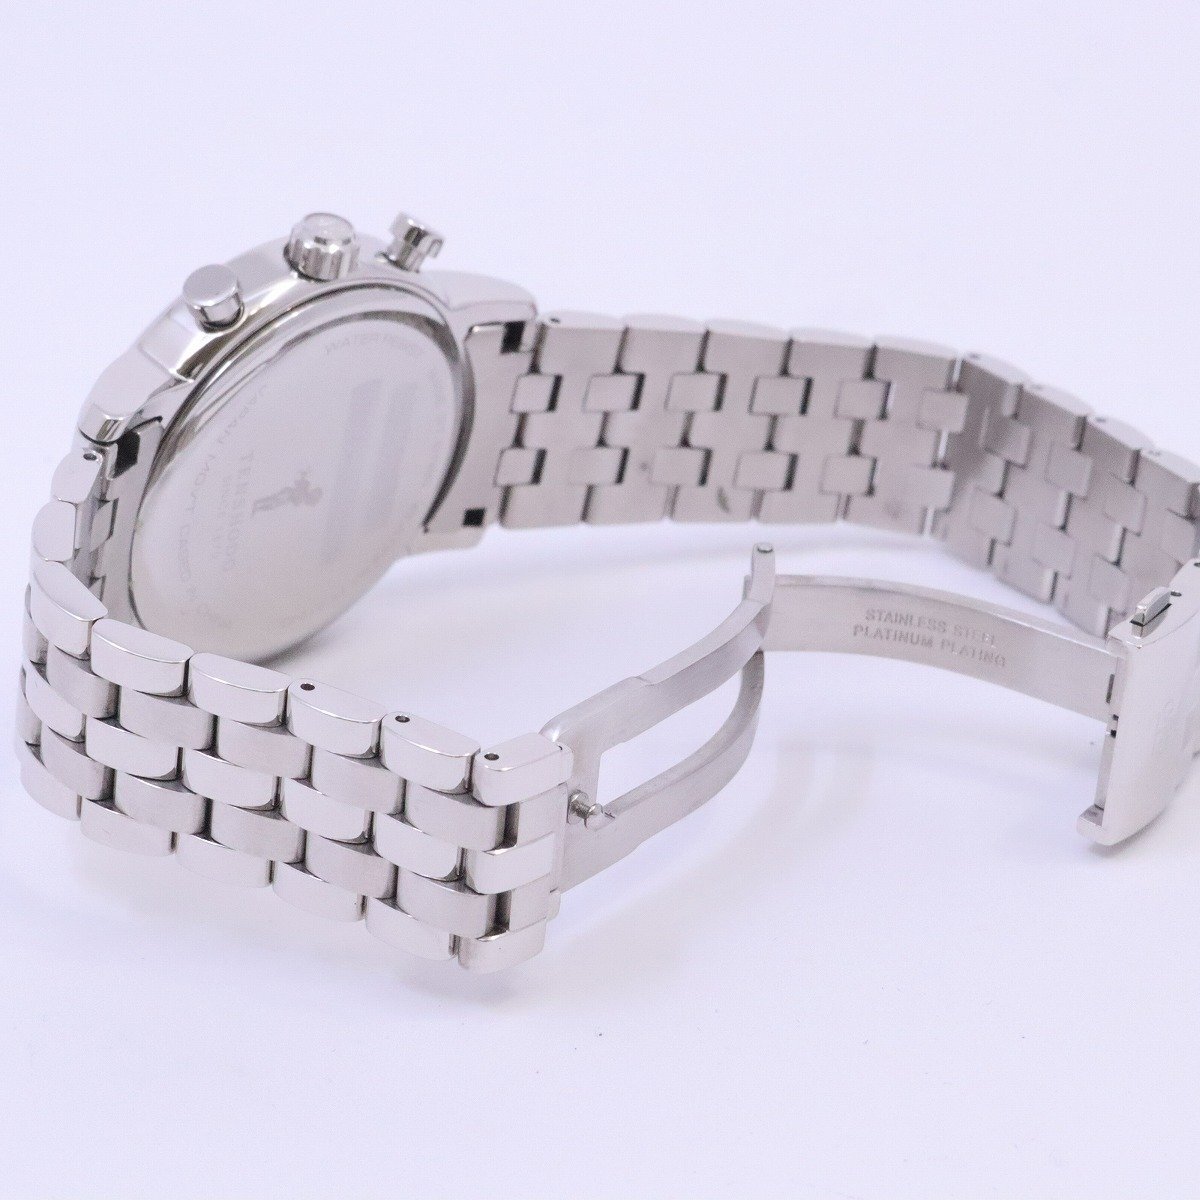 [ goods with special circumstances ] Tenshodo TENSHODO business alarm quartz men's wristwatch white face original SS belt change belt attaching [... pawnshop ]